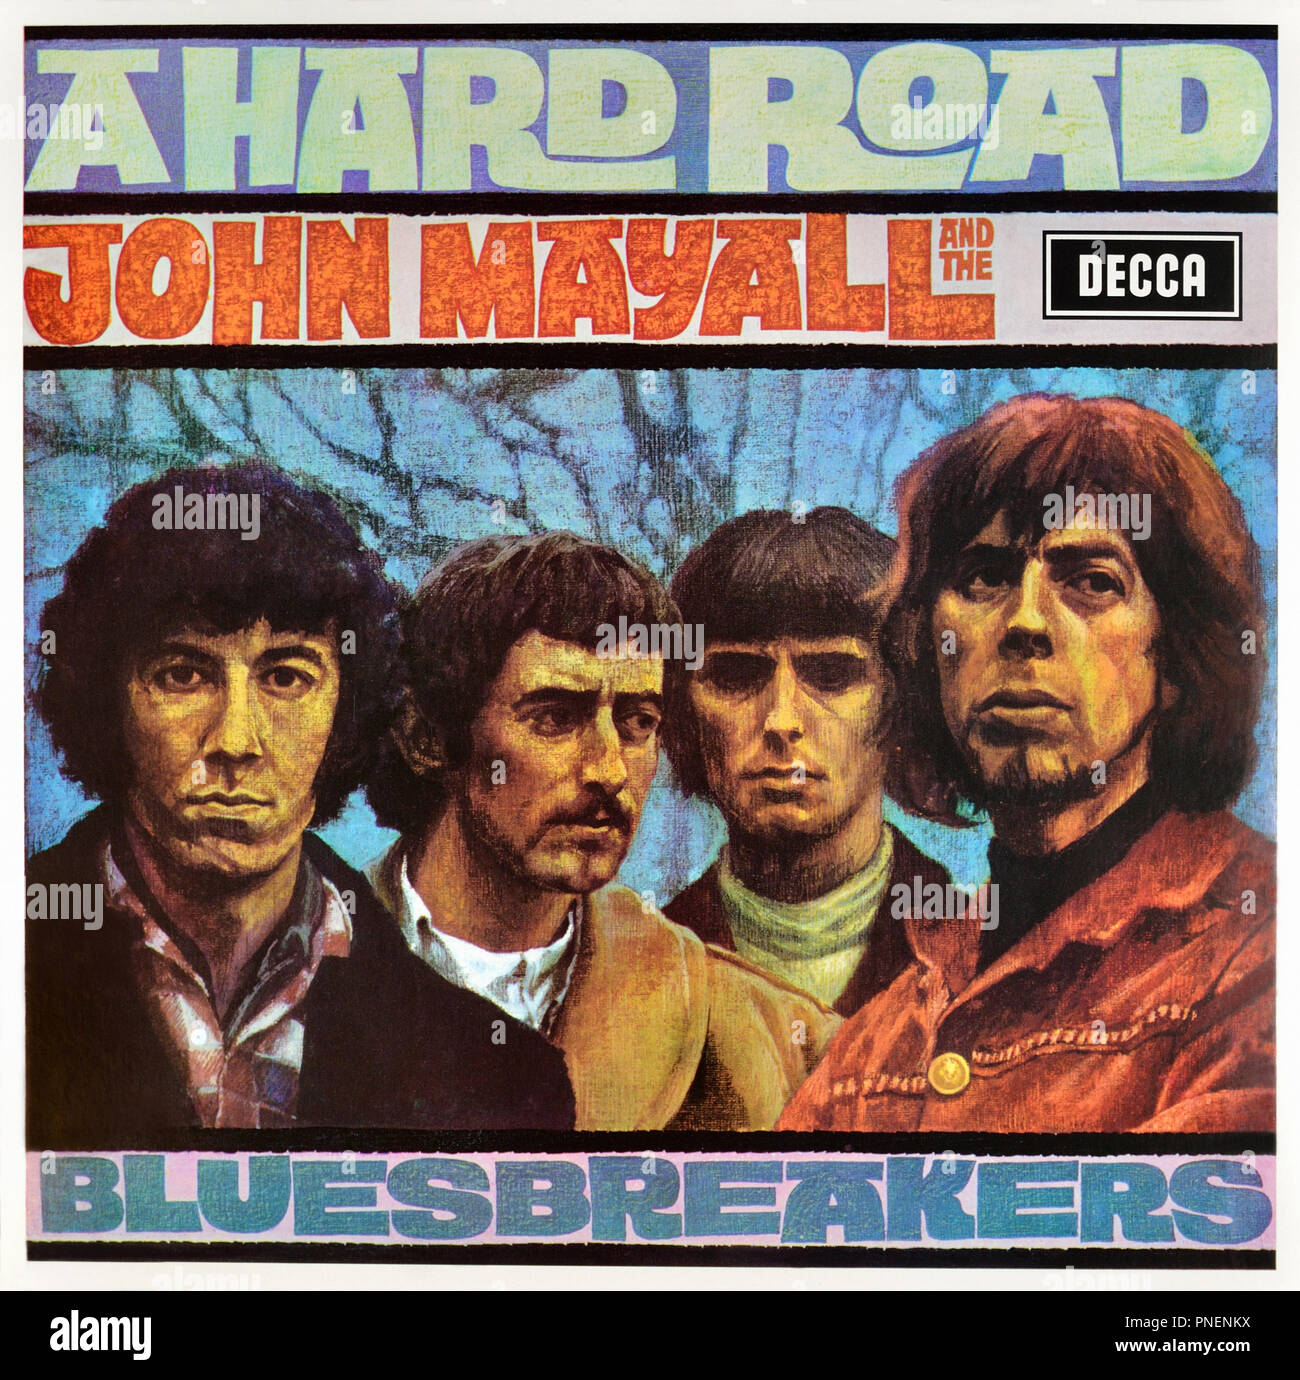 John Mayall and the Bluesbreakers - original Vinyl Album Cover - A Hard Road - 1967 Stockfoto